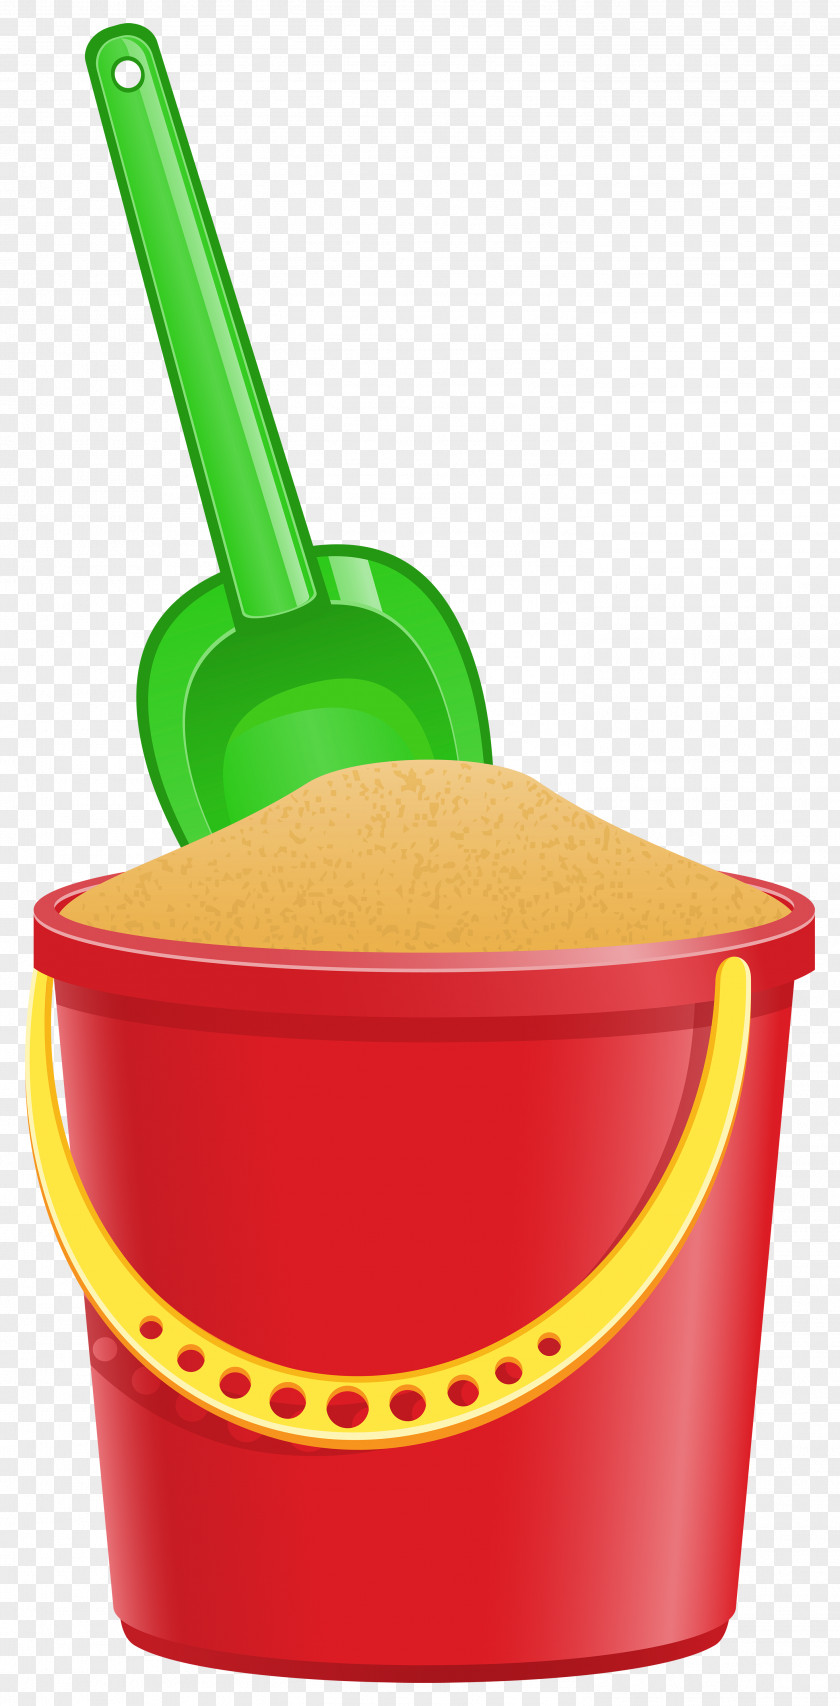 Bucket With Shovel Transparent Clip Art Image PNG